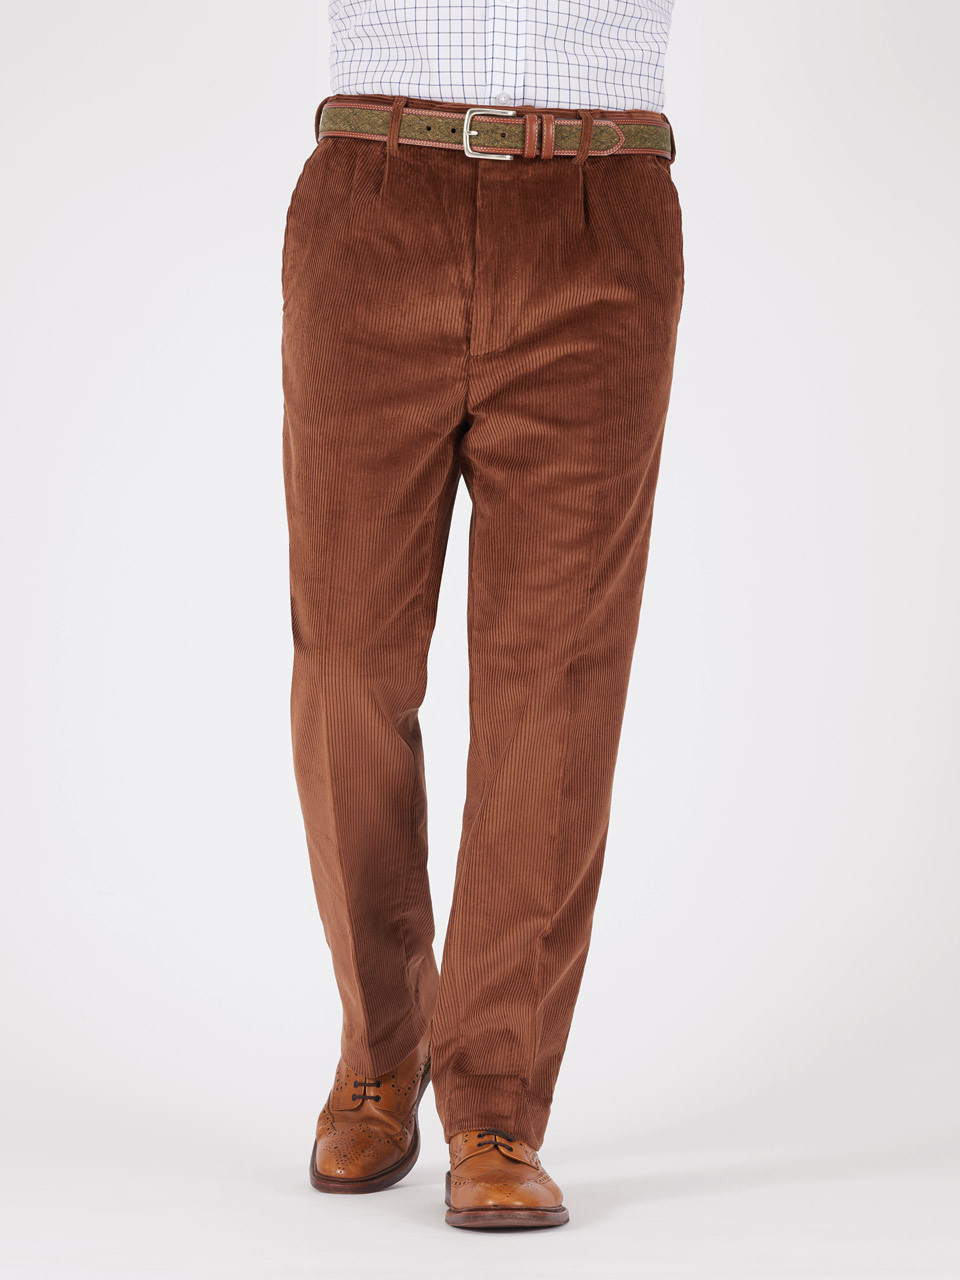 KAVU Chilli Roy Pant Corduroy Hiking Pants, Elastic Waistband Built-in  Belt-Olive-M at Amazon Men's Clothing store